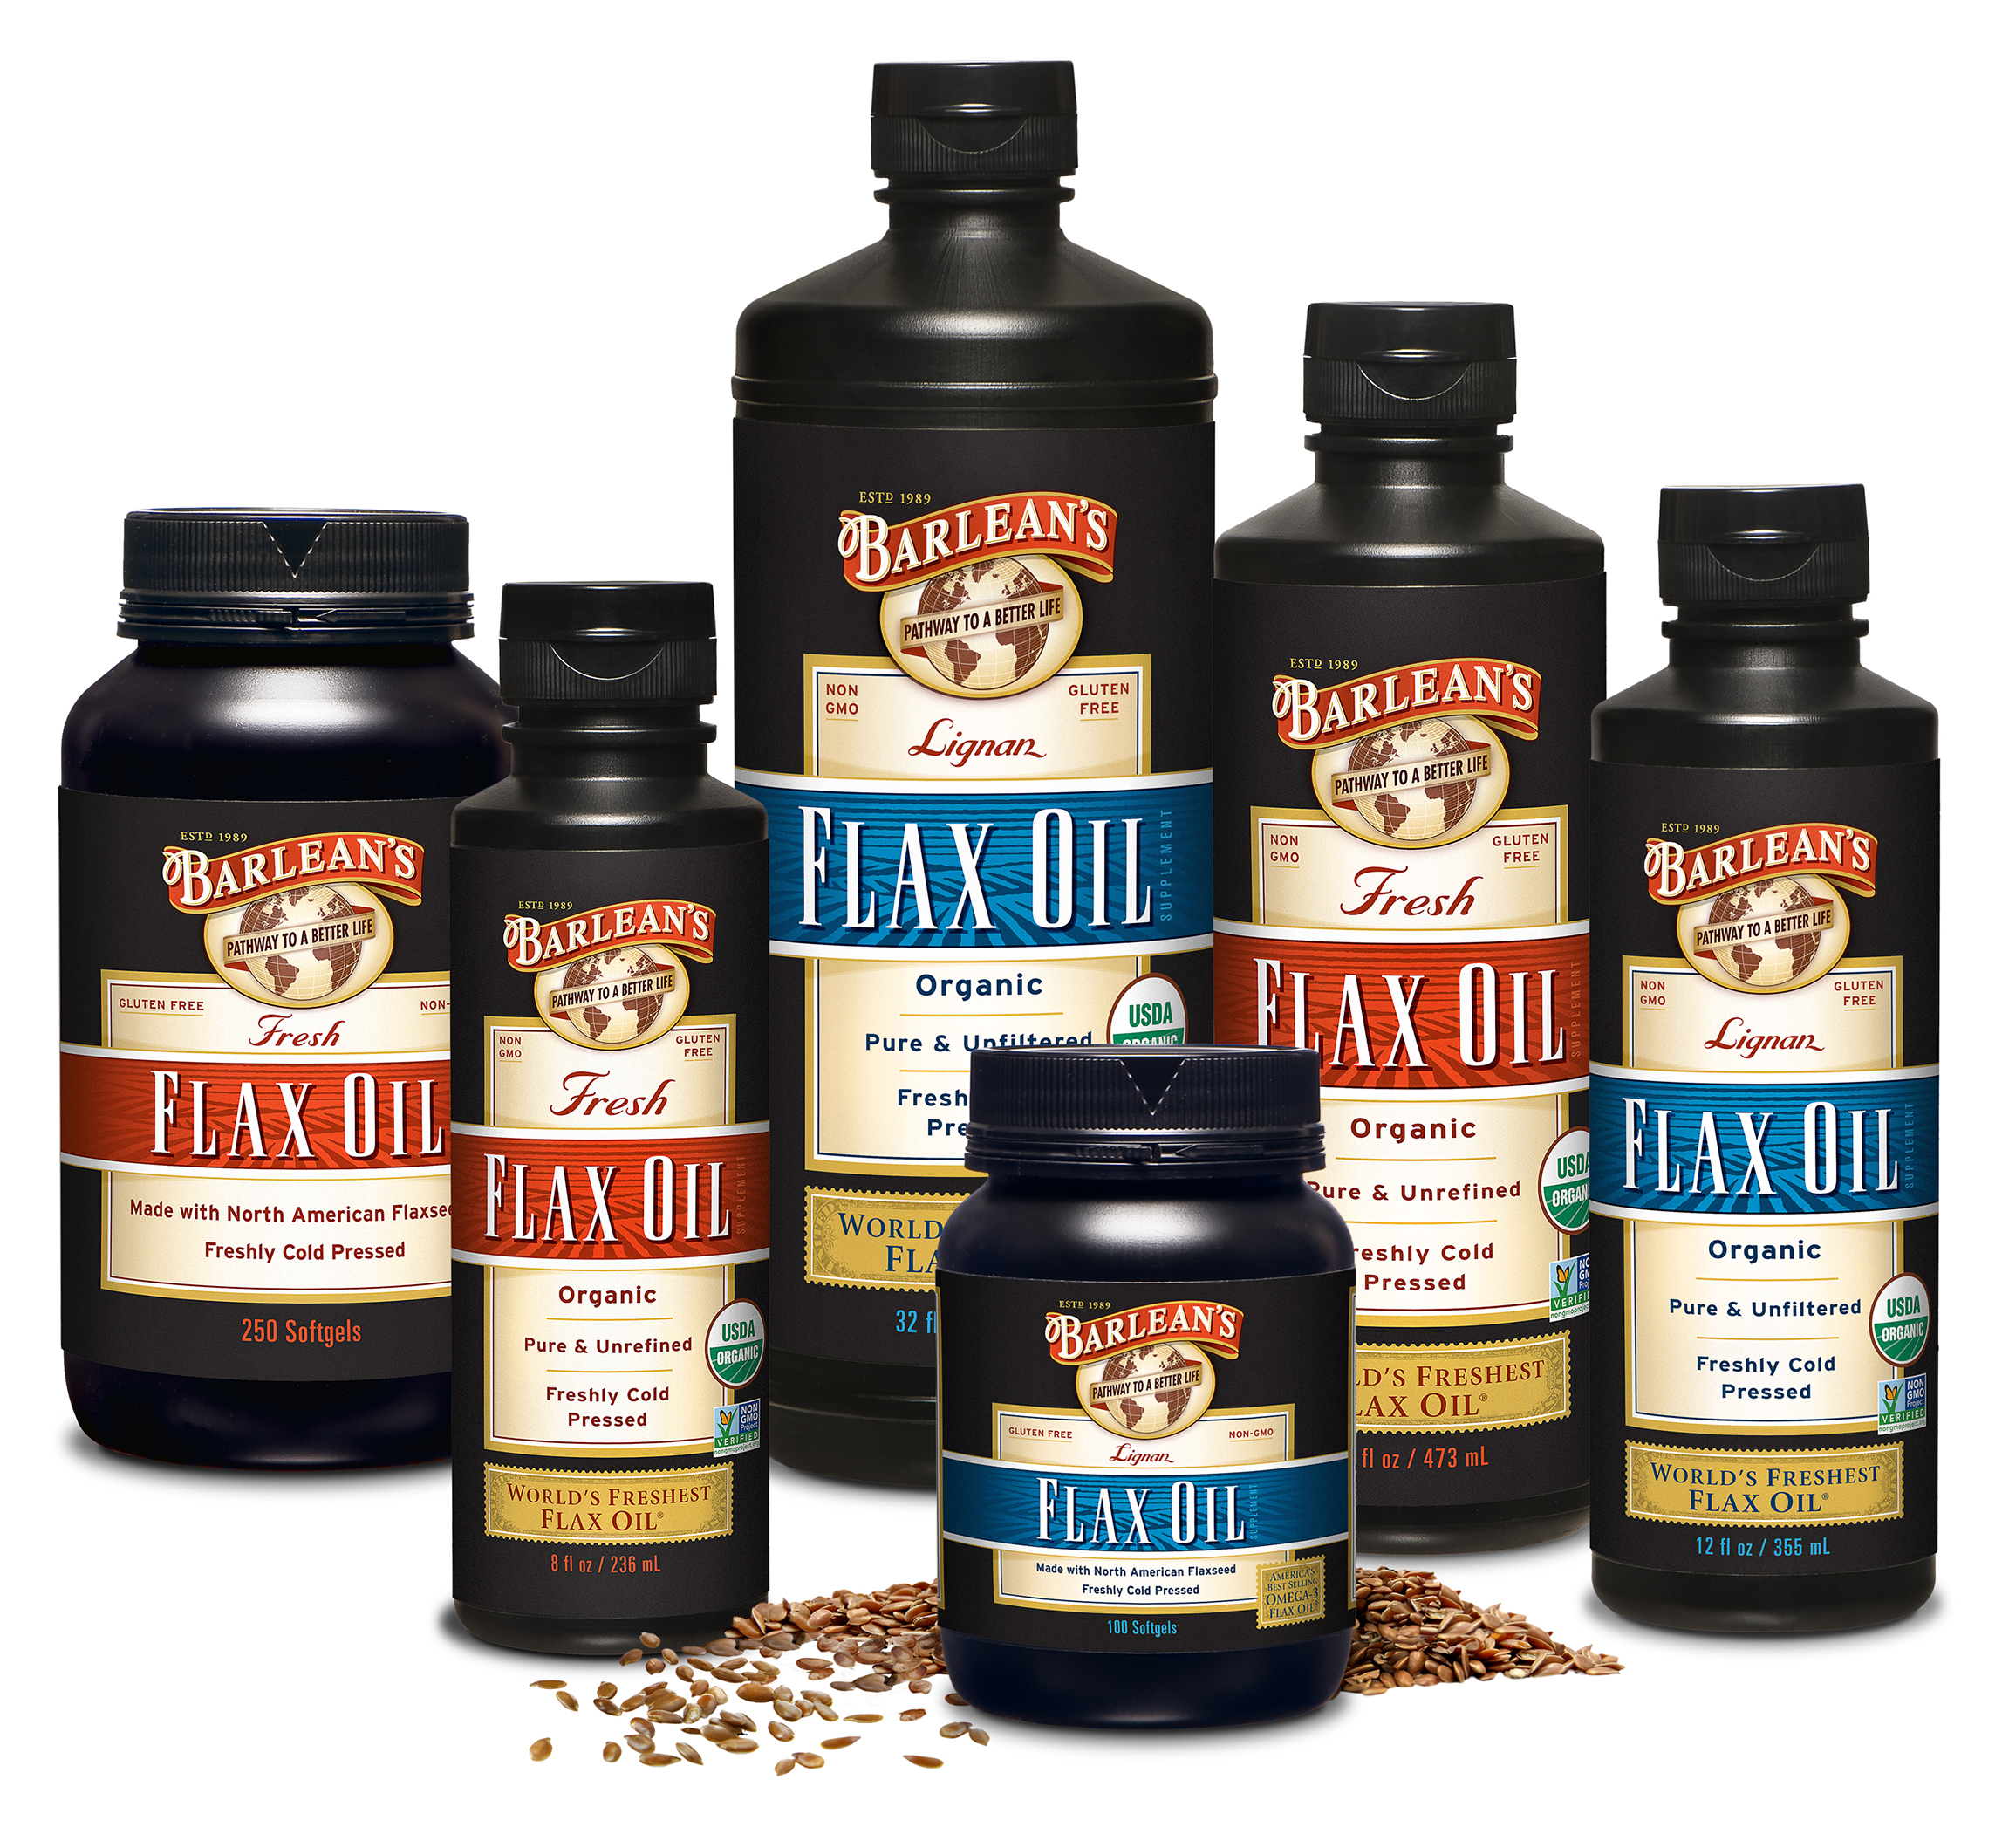 Brevail Capsules & FortiFlax Organic Supplier | Barlean's Organic Oils